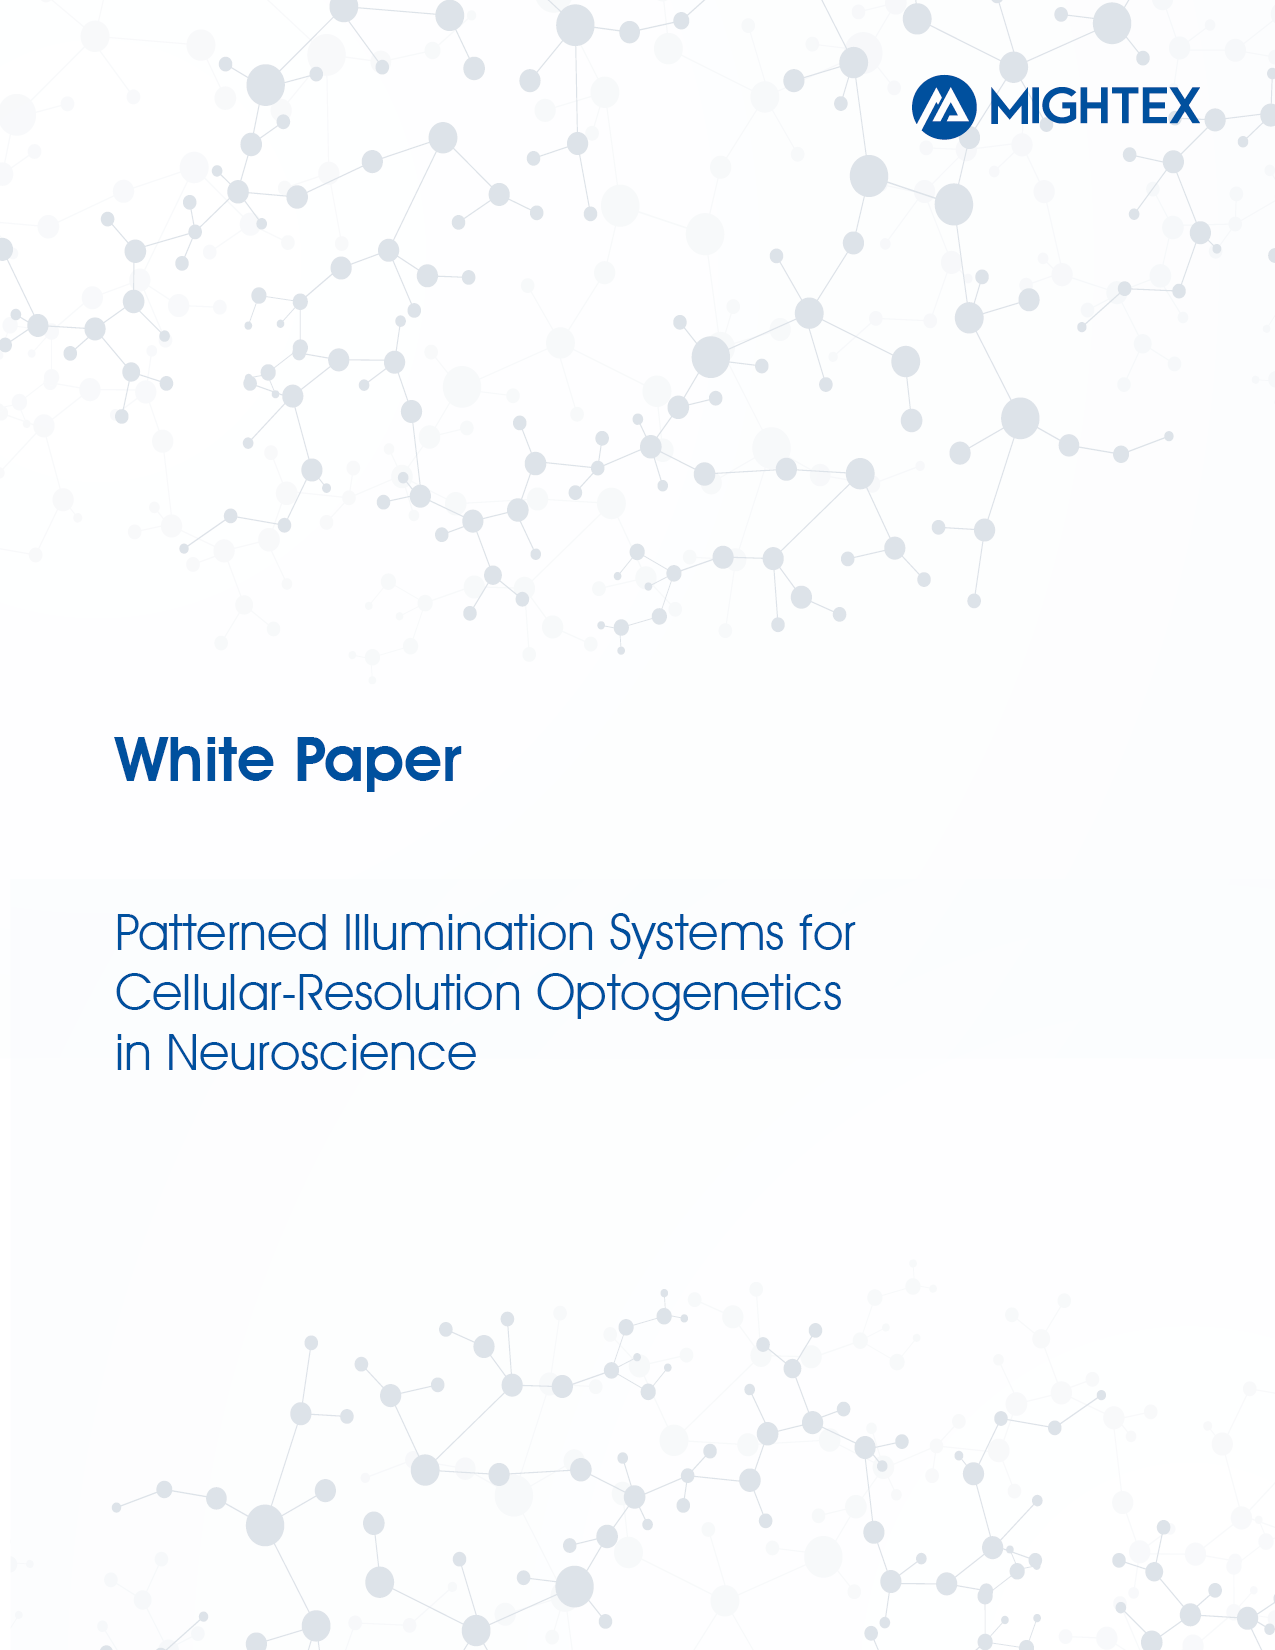 optogenetics_whitepaper_polygon2